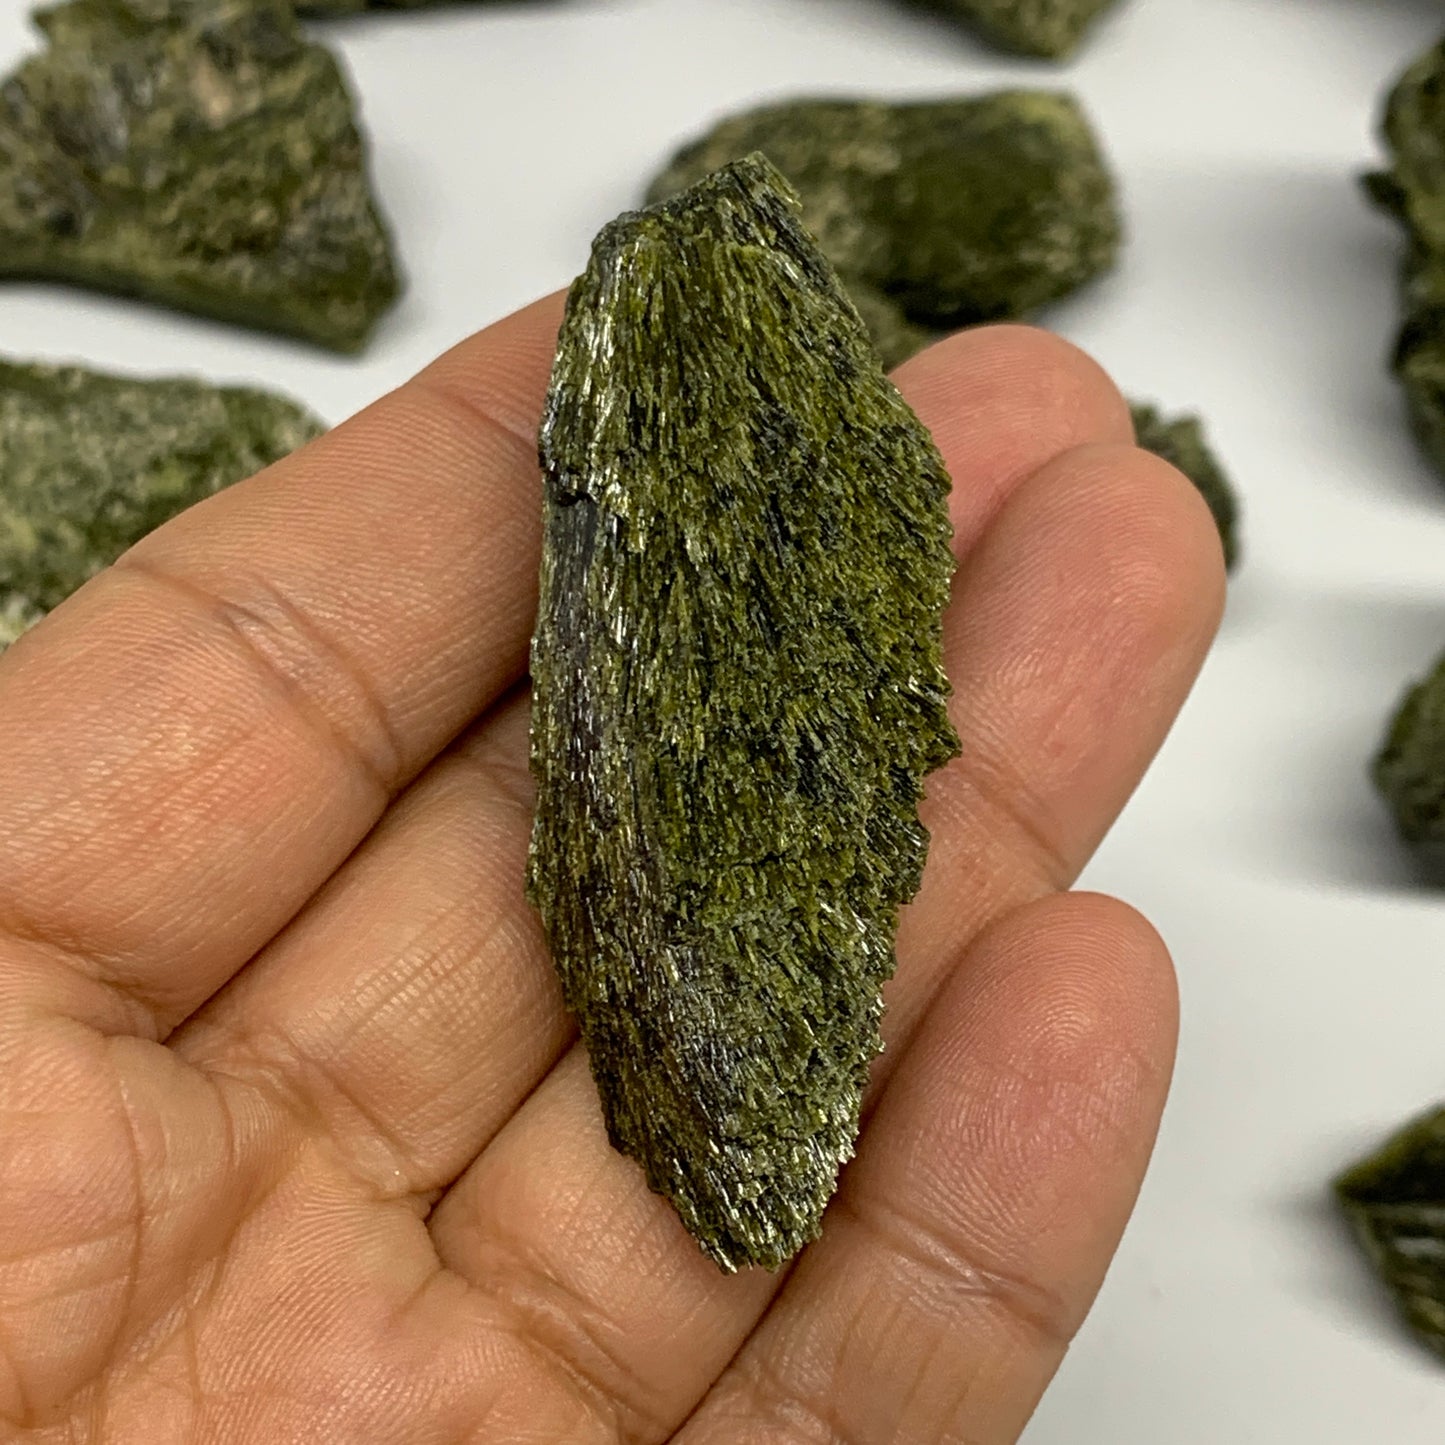 1.48 lbs, 1.5"-2.5", 15pcs, Green Epidote Leaf/Cluster Minerals Specimens, B2748